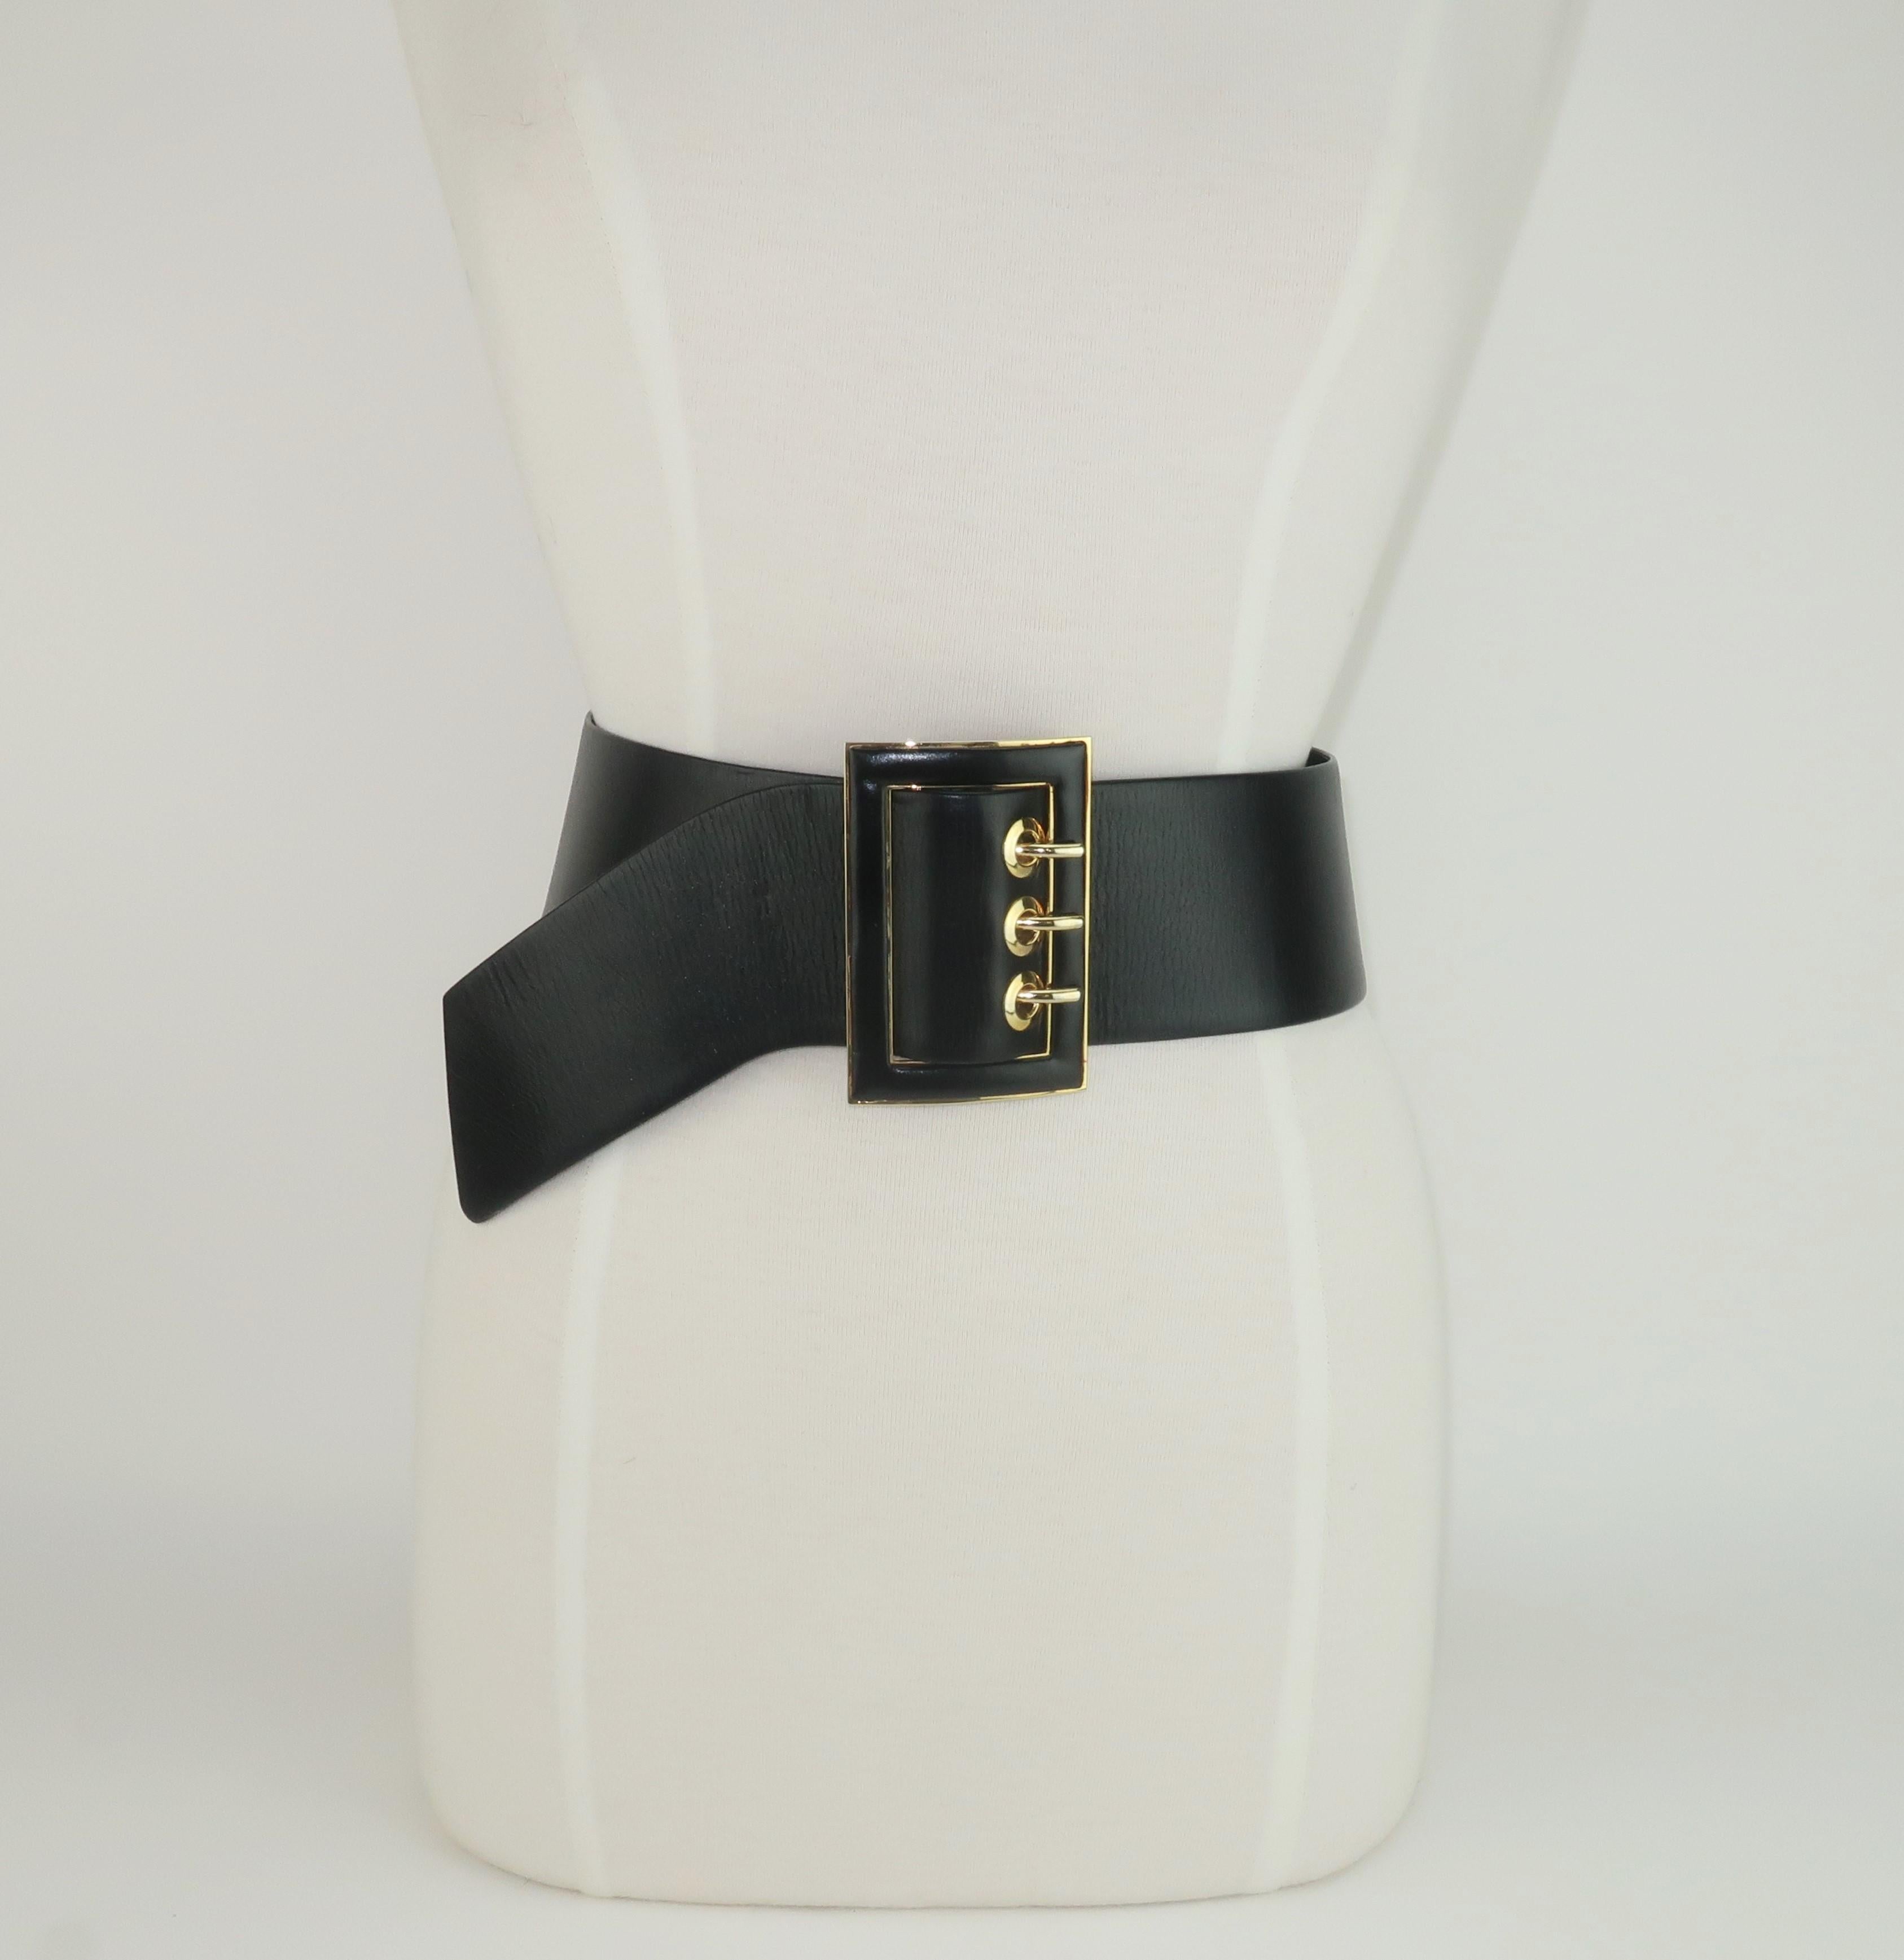 Judith Leiber Adjustable Black Leather Belt In Good Condition For Sale In Atlanta, GA